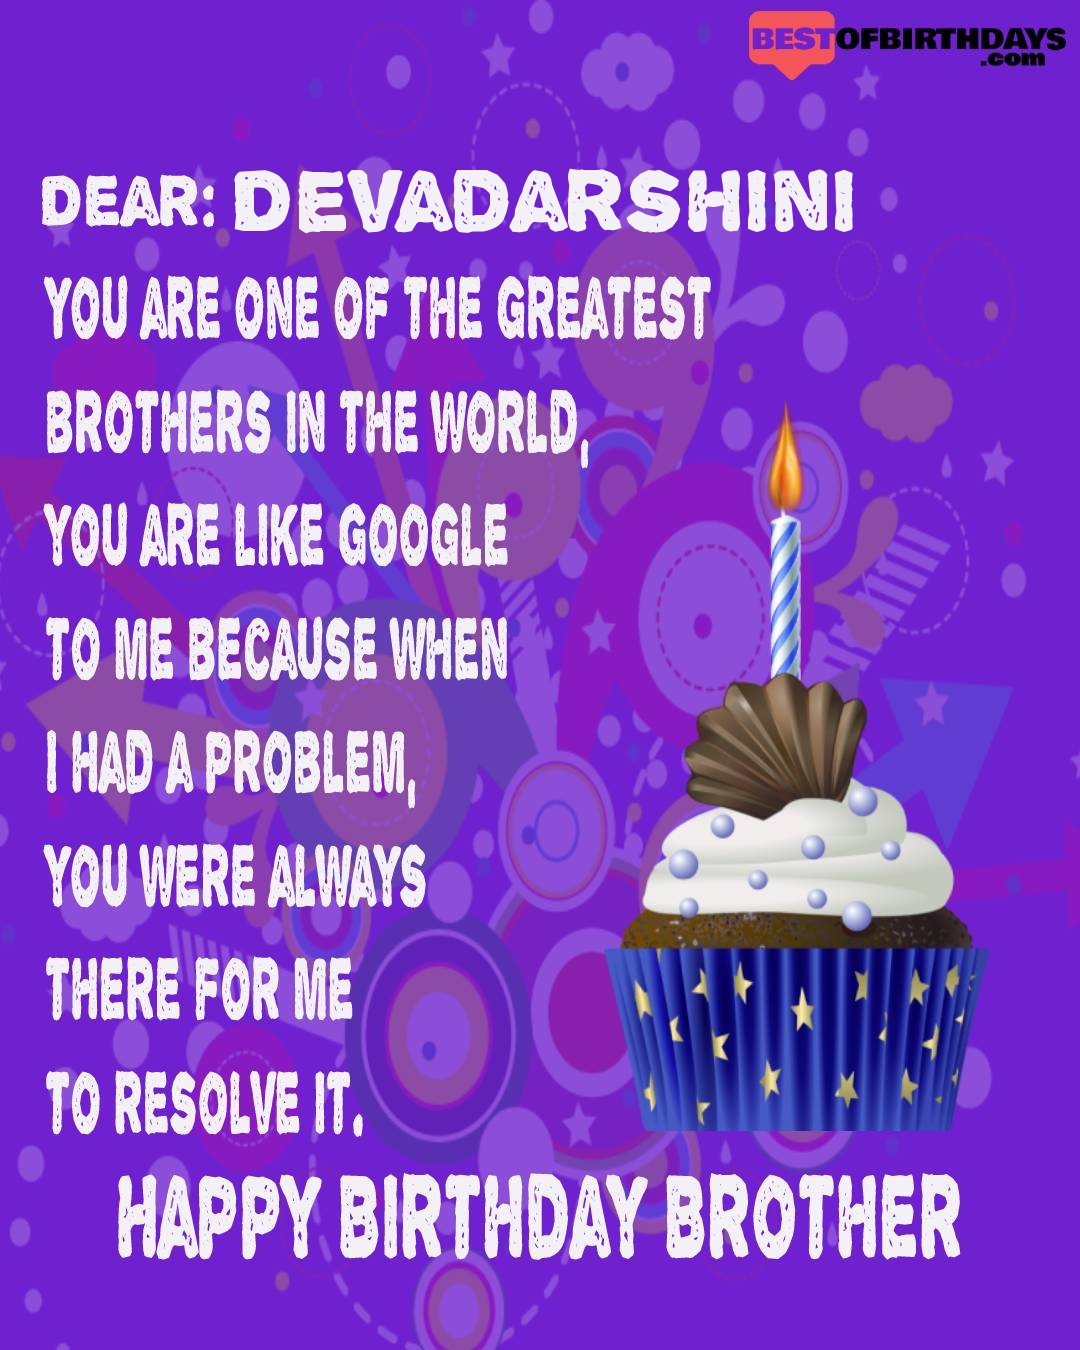 Happy birthday devadarshini bhai brother bro